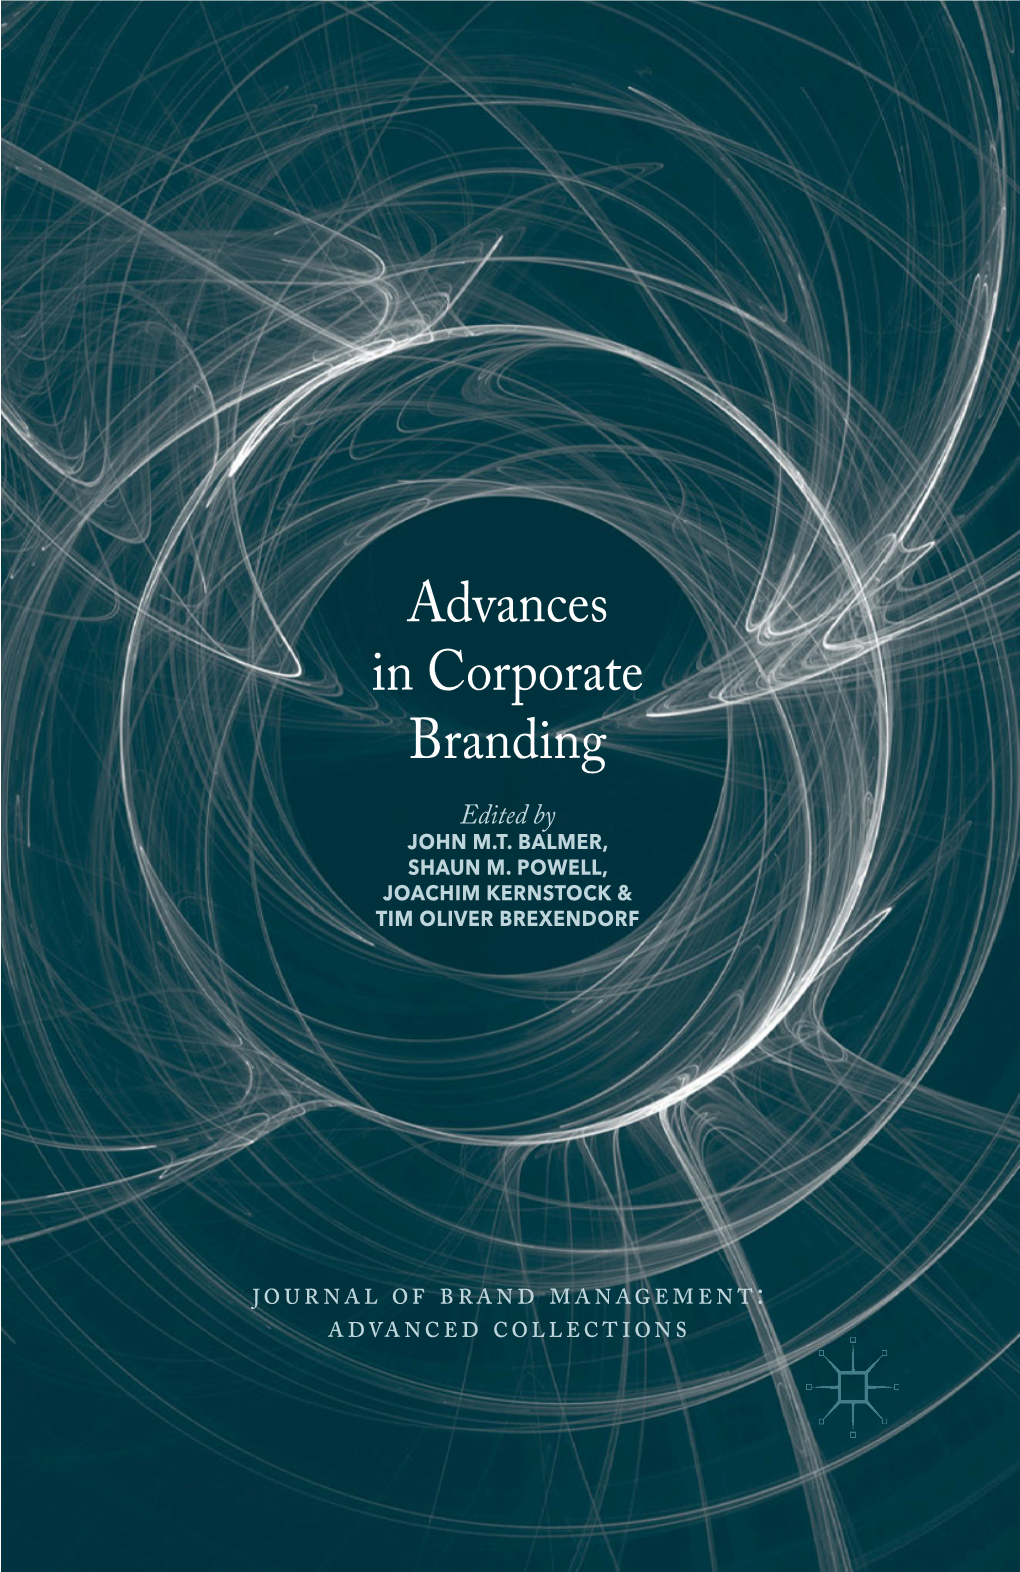 Advances in Corporate Branding Edited by JOHN M.T